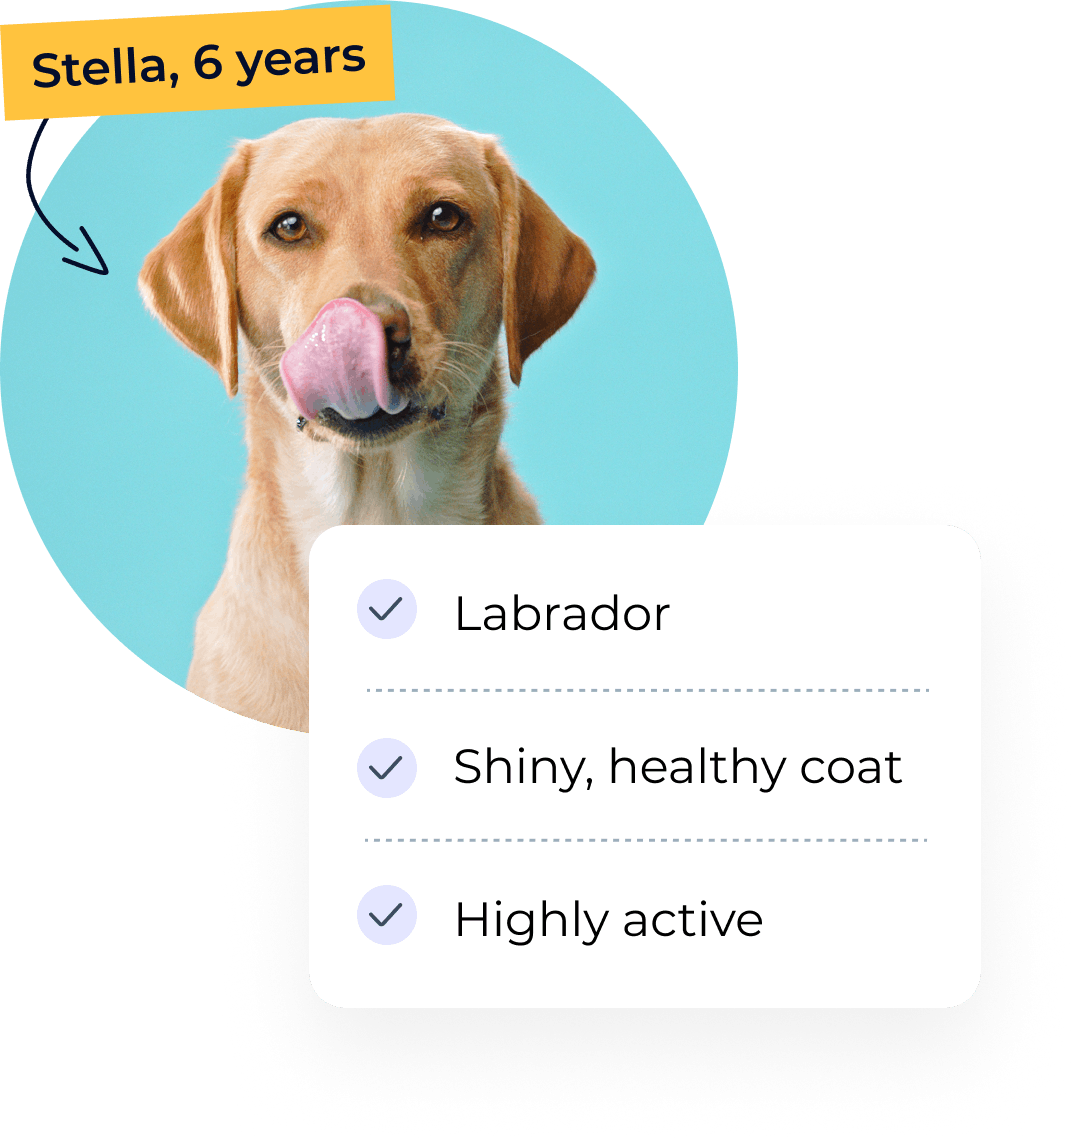 Stella - Labrador, 6 years old